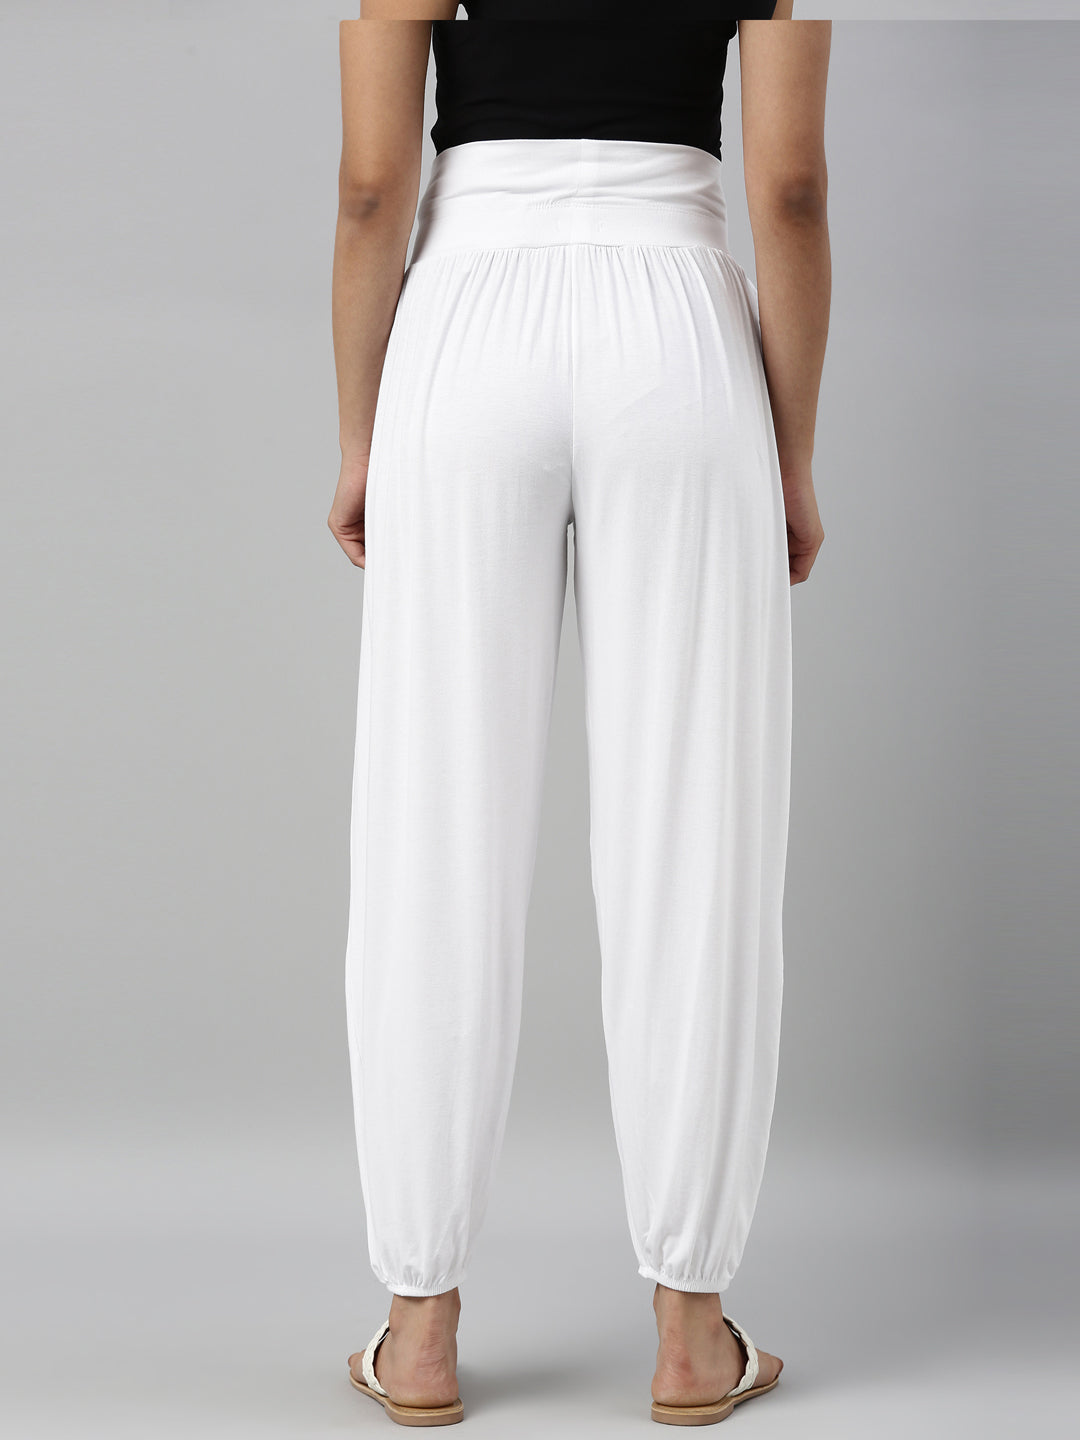 Women Solid White Harem Pants